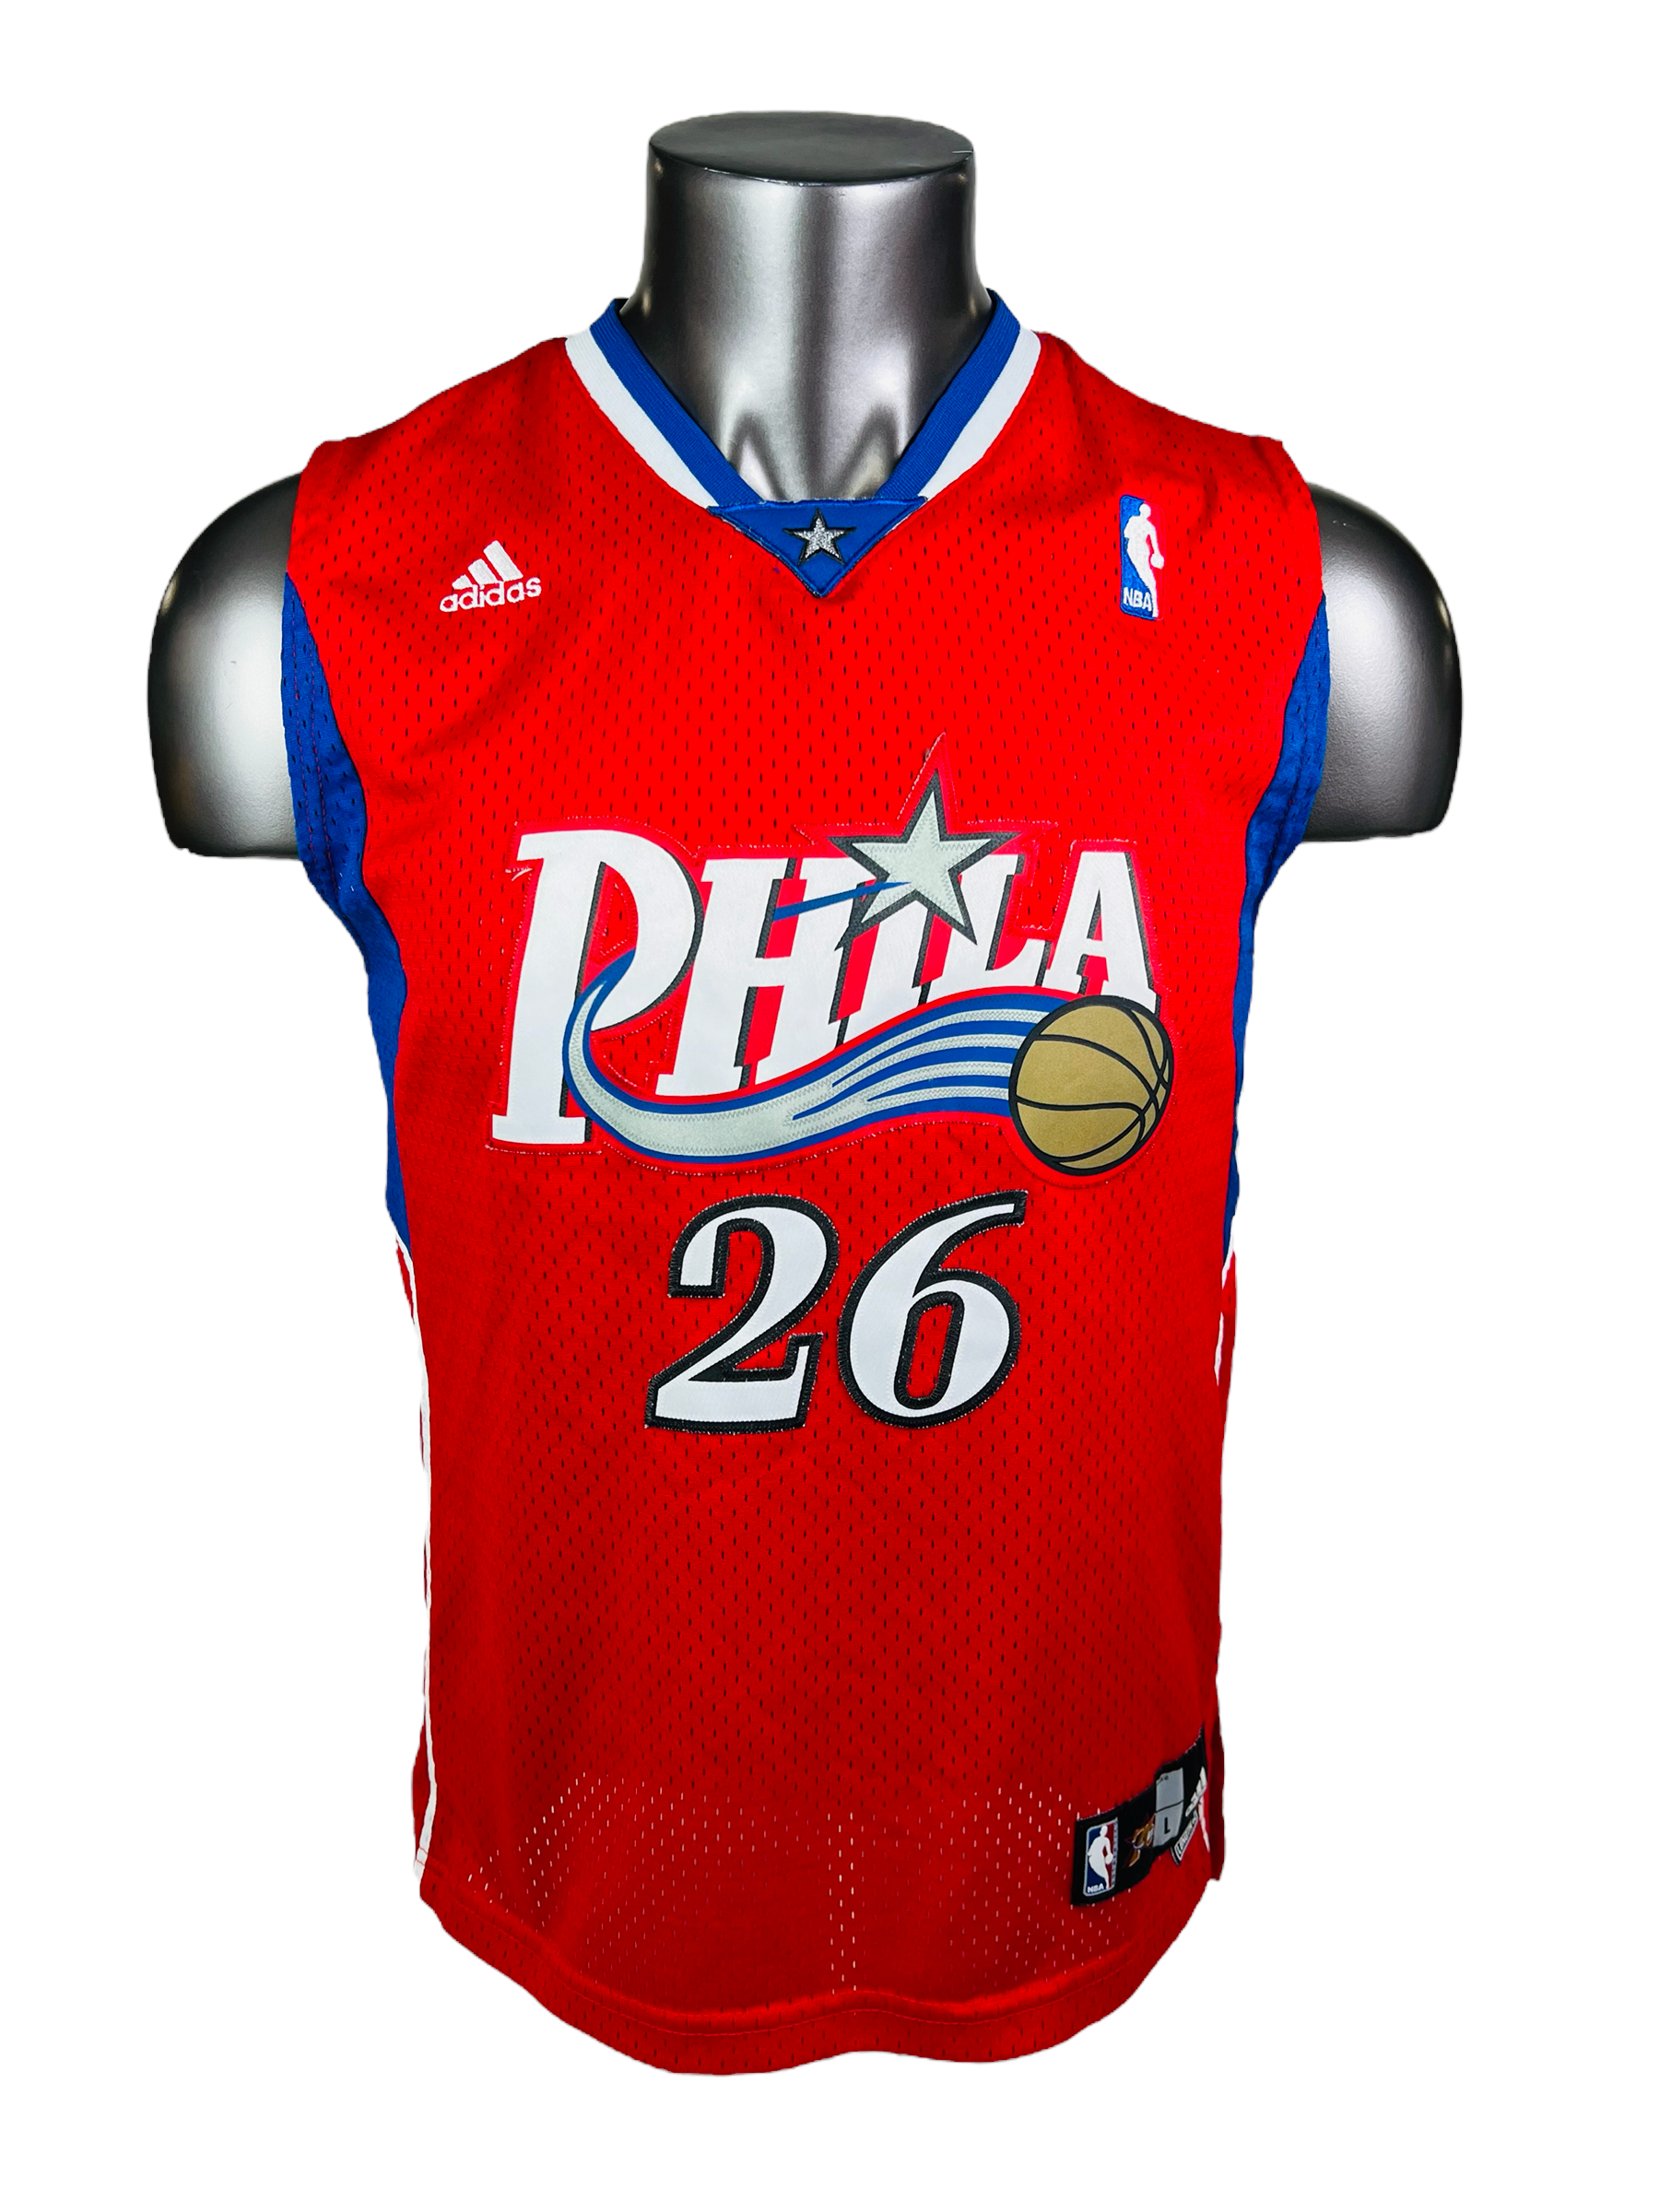 2007-08 Philadelphia 76ers Kyle Korver #26 Game Used Red Jersey